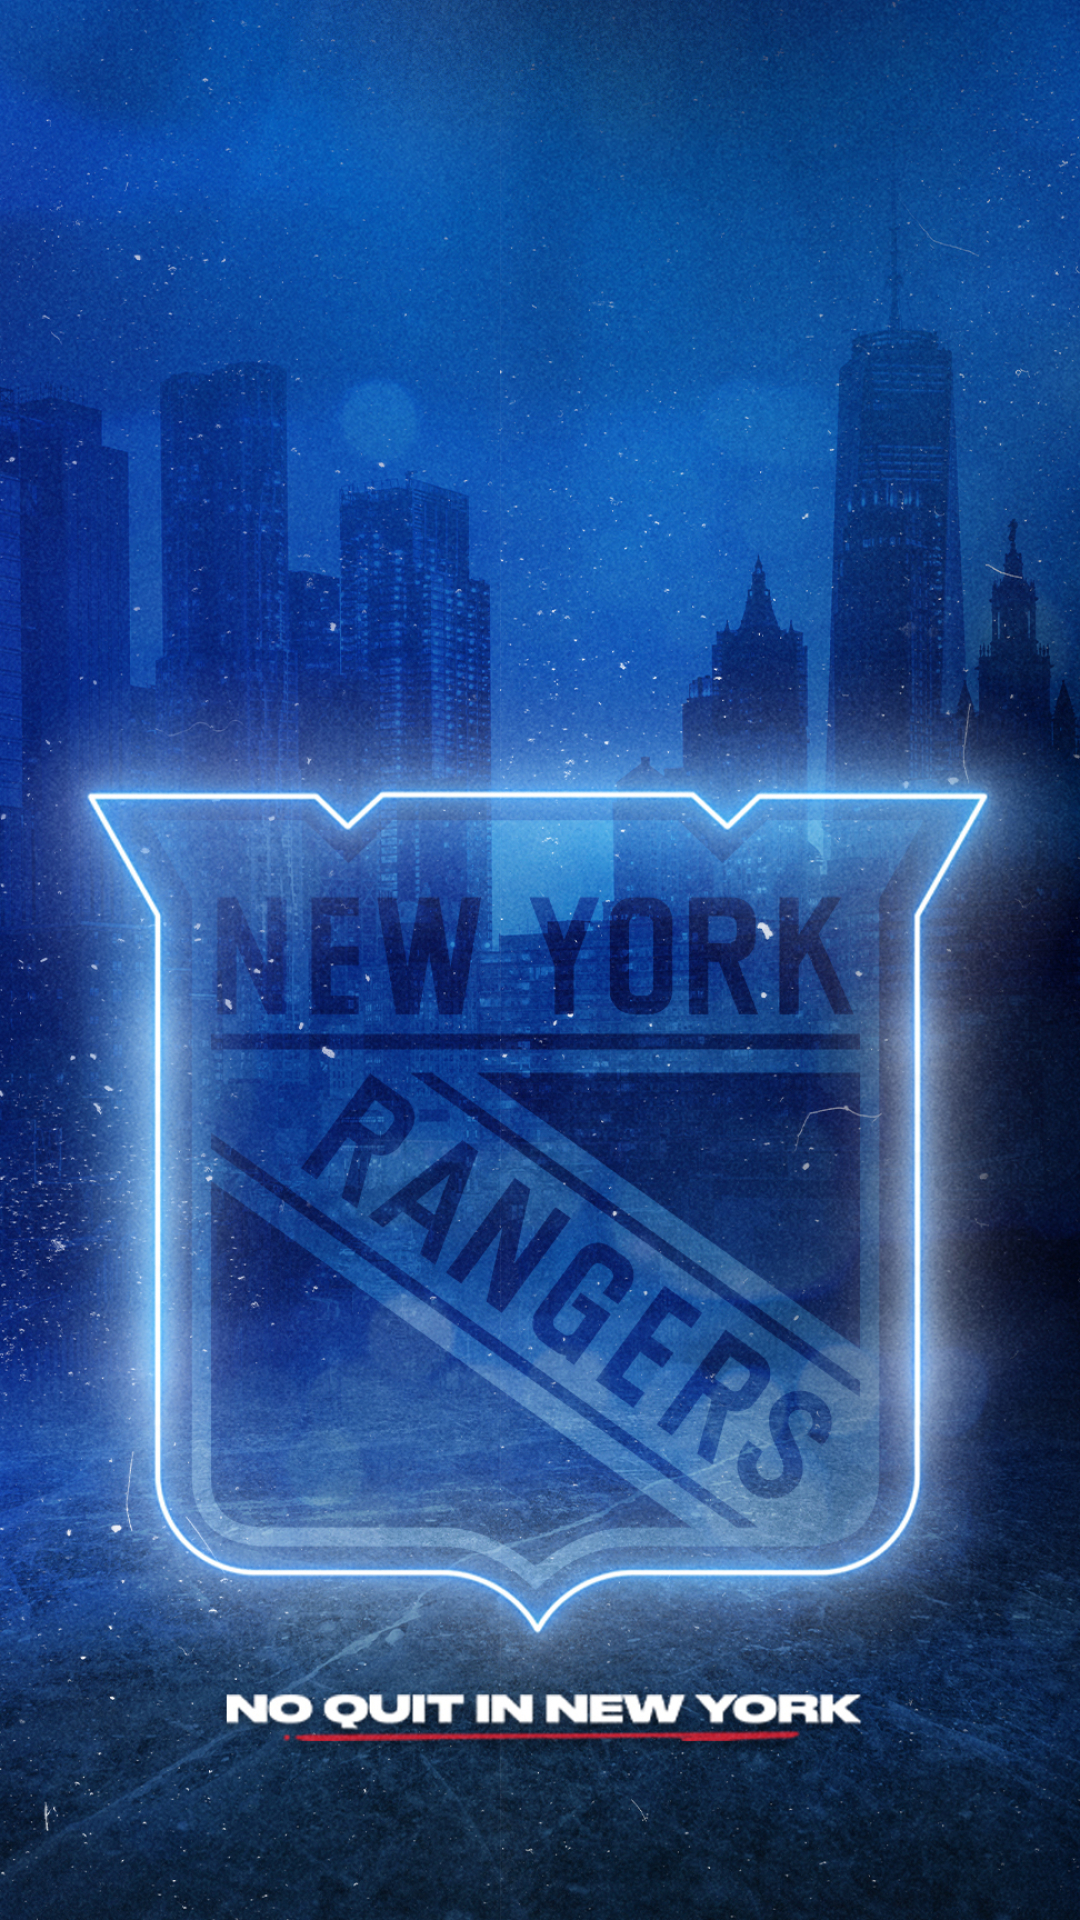 1080x1920 Mobile Wallpaper Downloads | New York Rangers